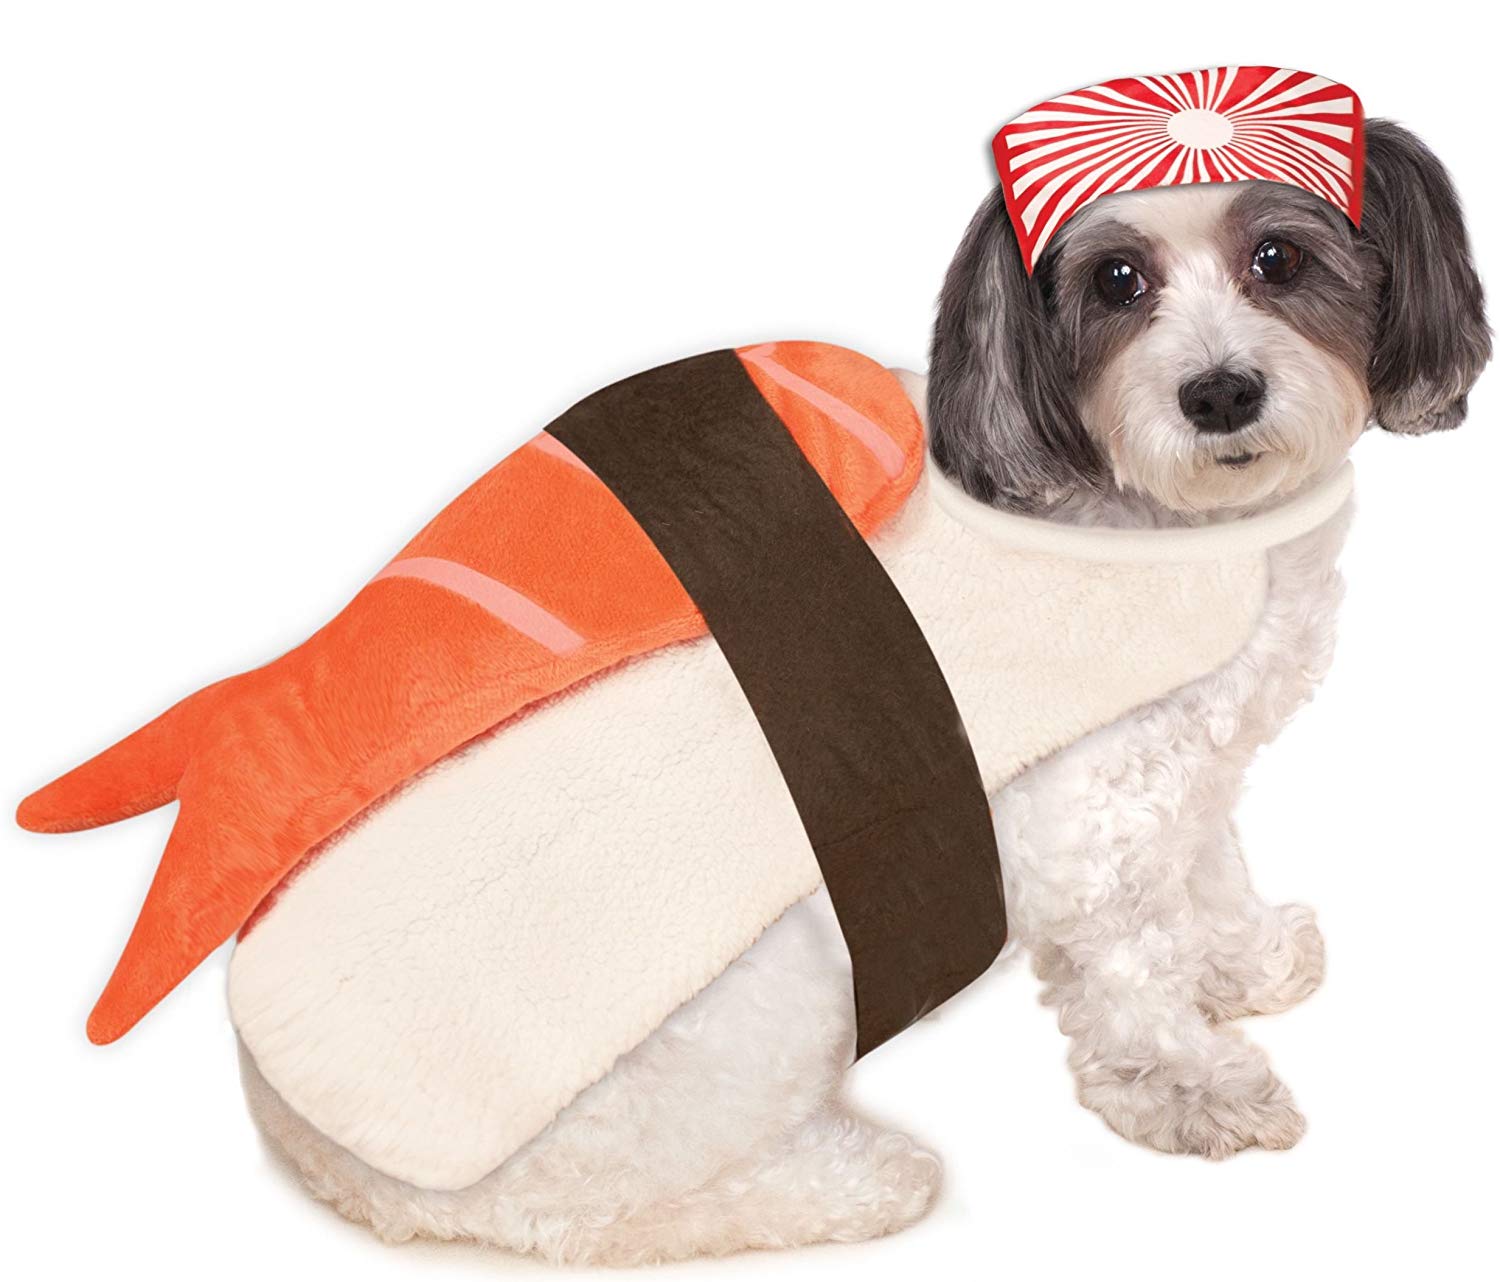 Small dog breed wearing a Sushi Dog Costume